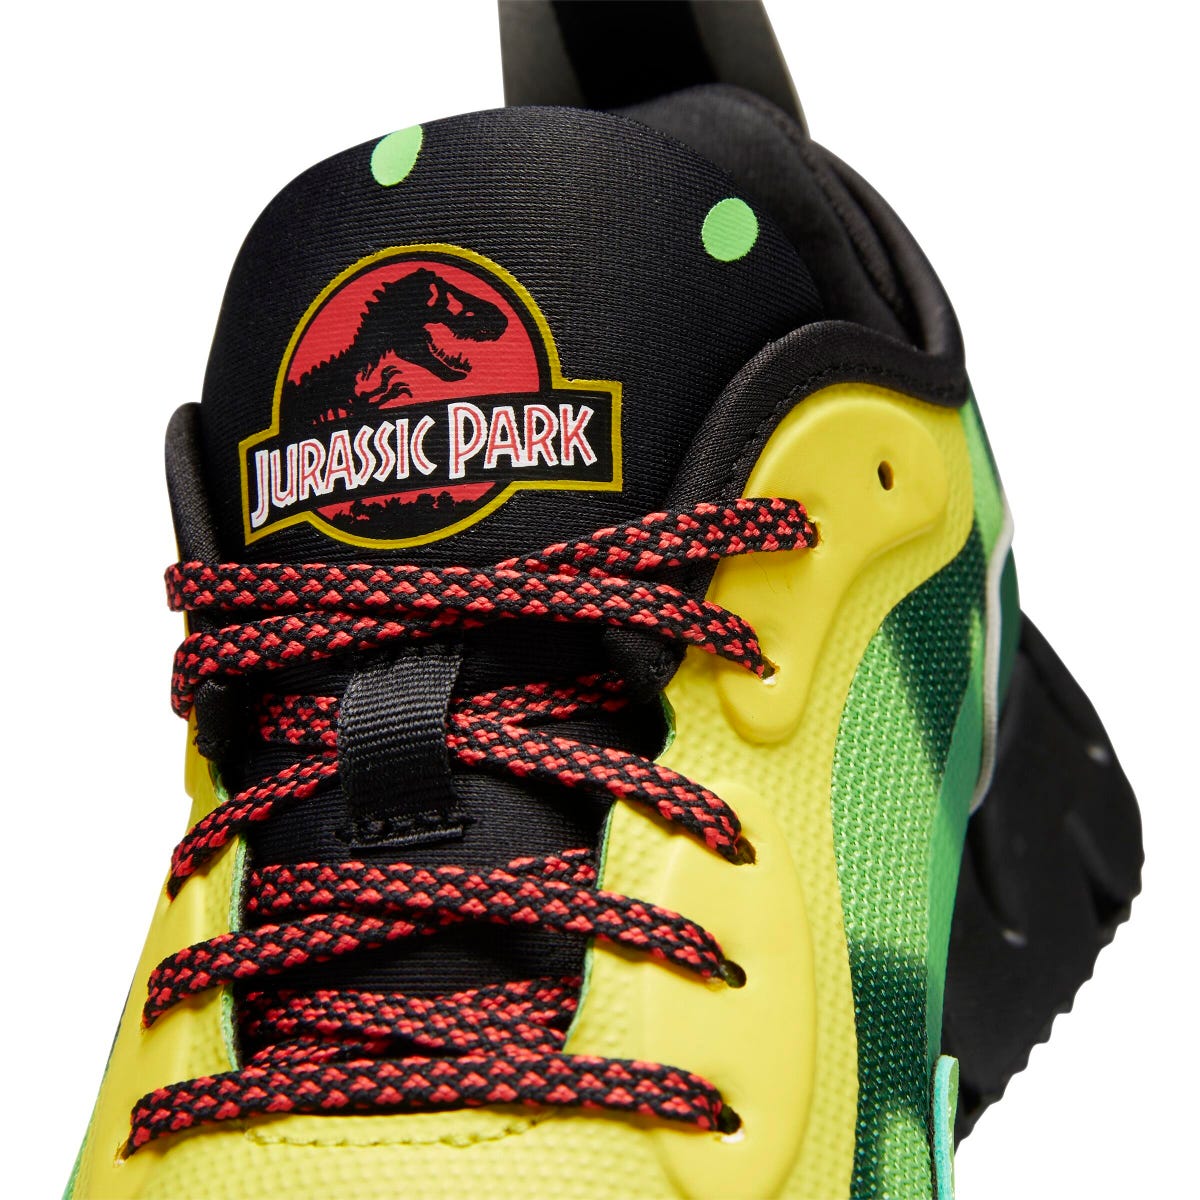 Reebok x Jurassic Park clothing